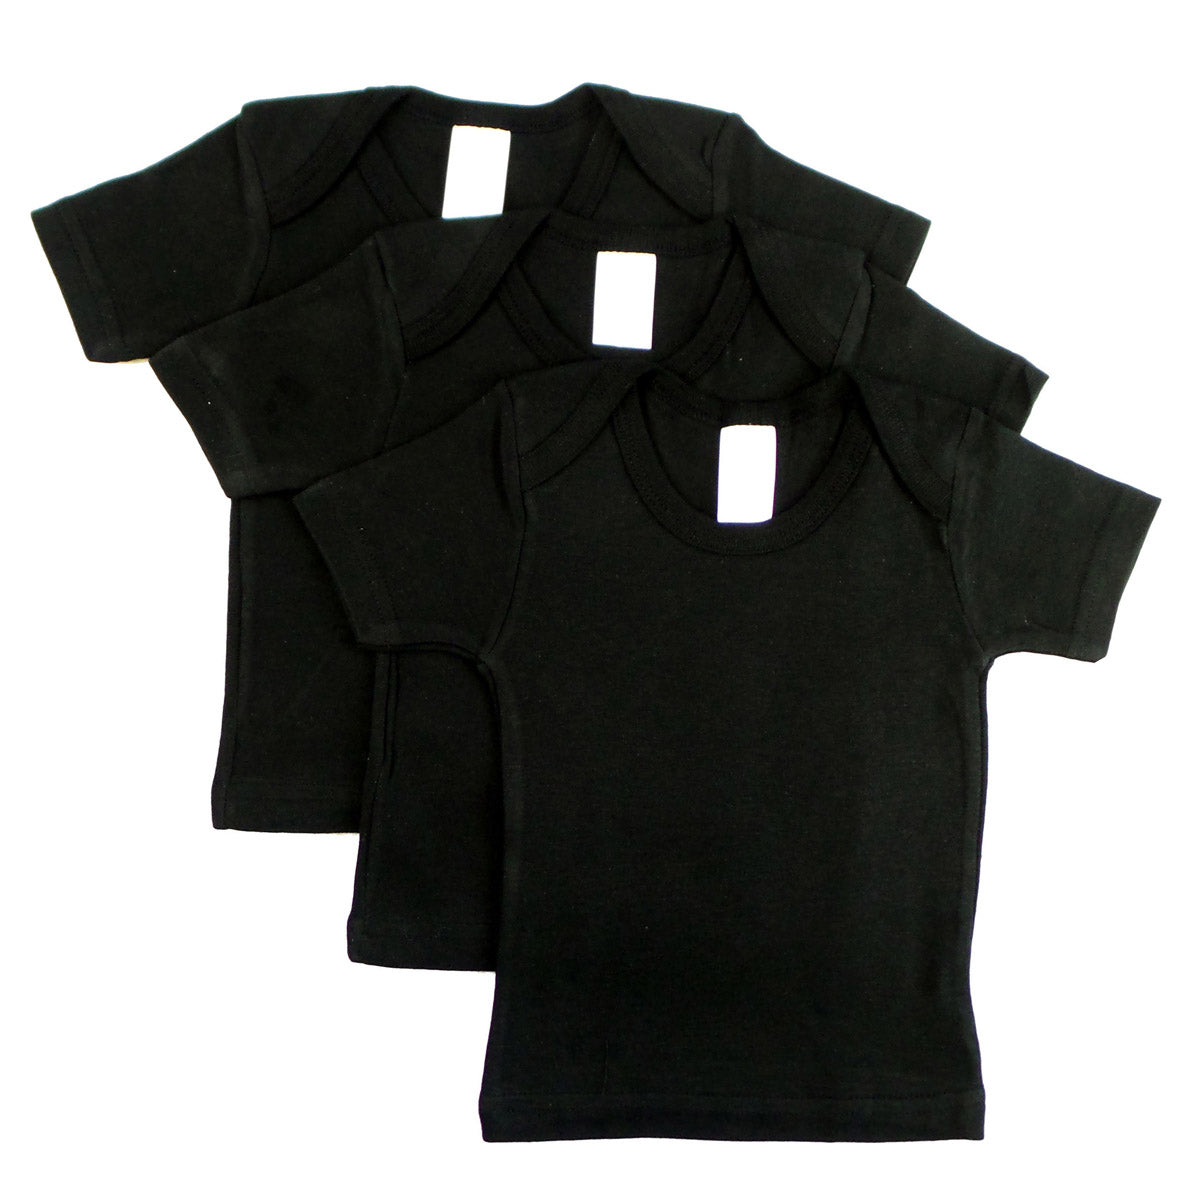 Black Short Sleeve Lap Shirt (Pack of 3) 0550BL.3